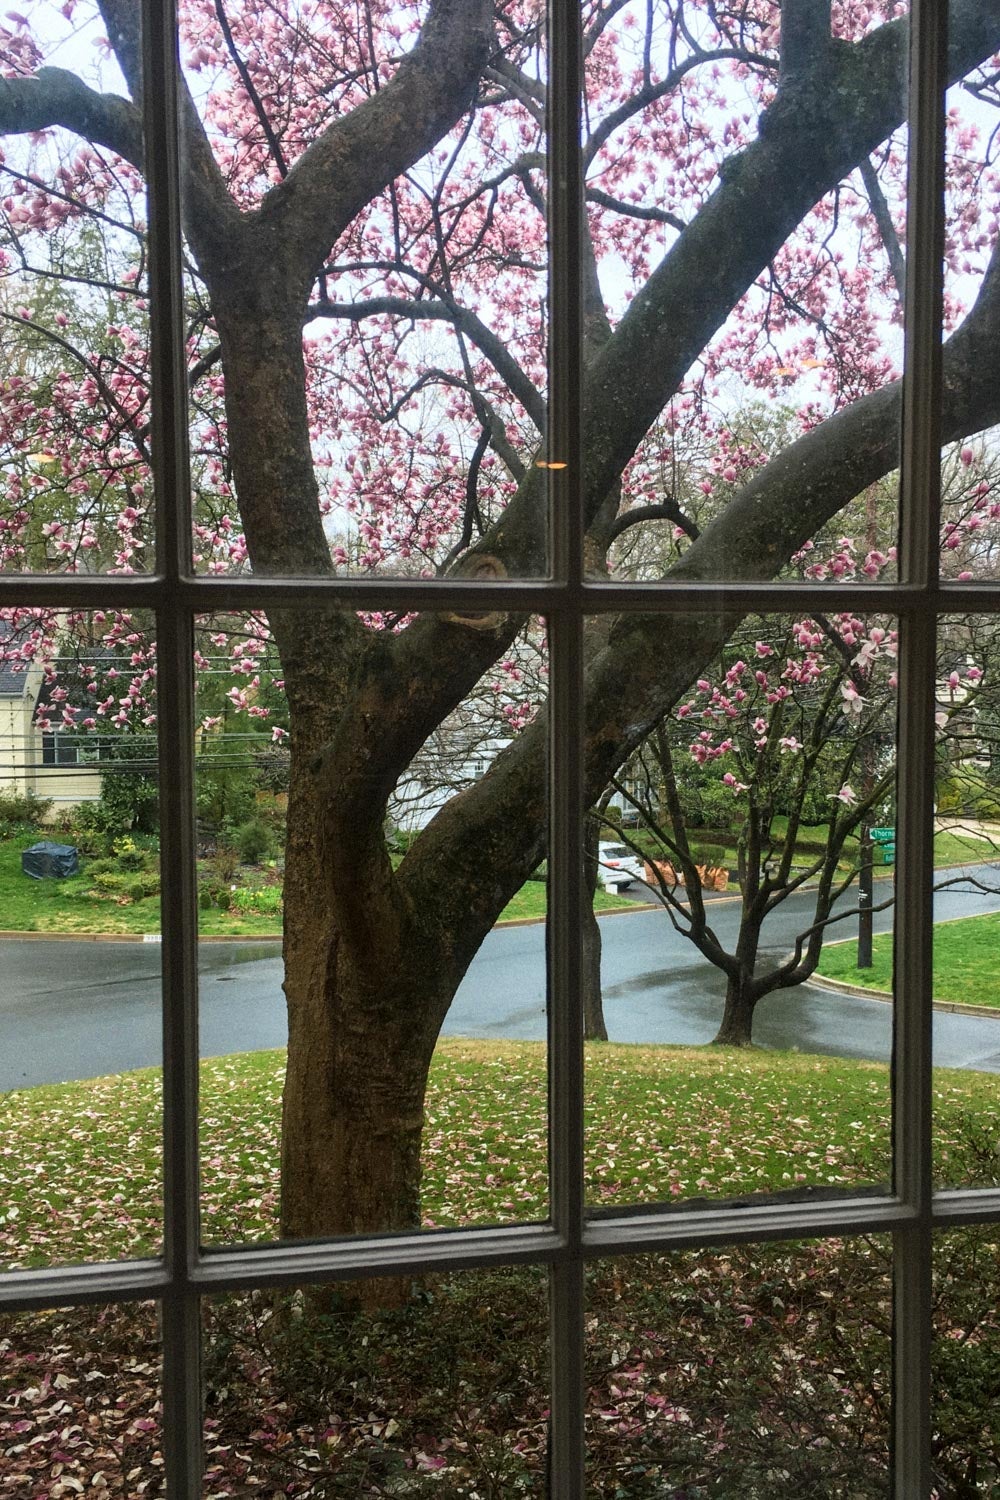 A window facing a cherry blossom tree.